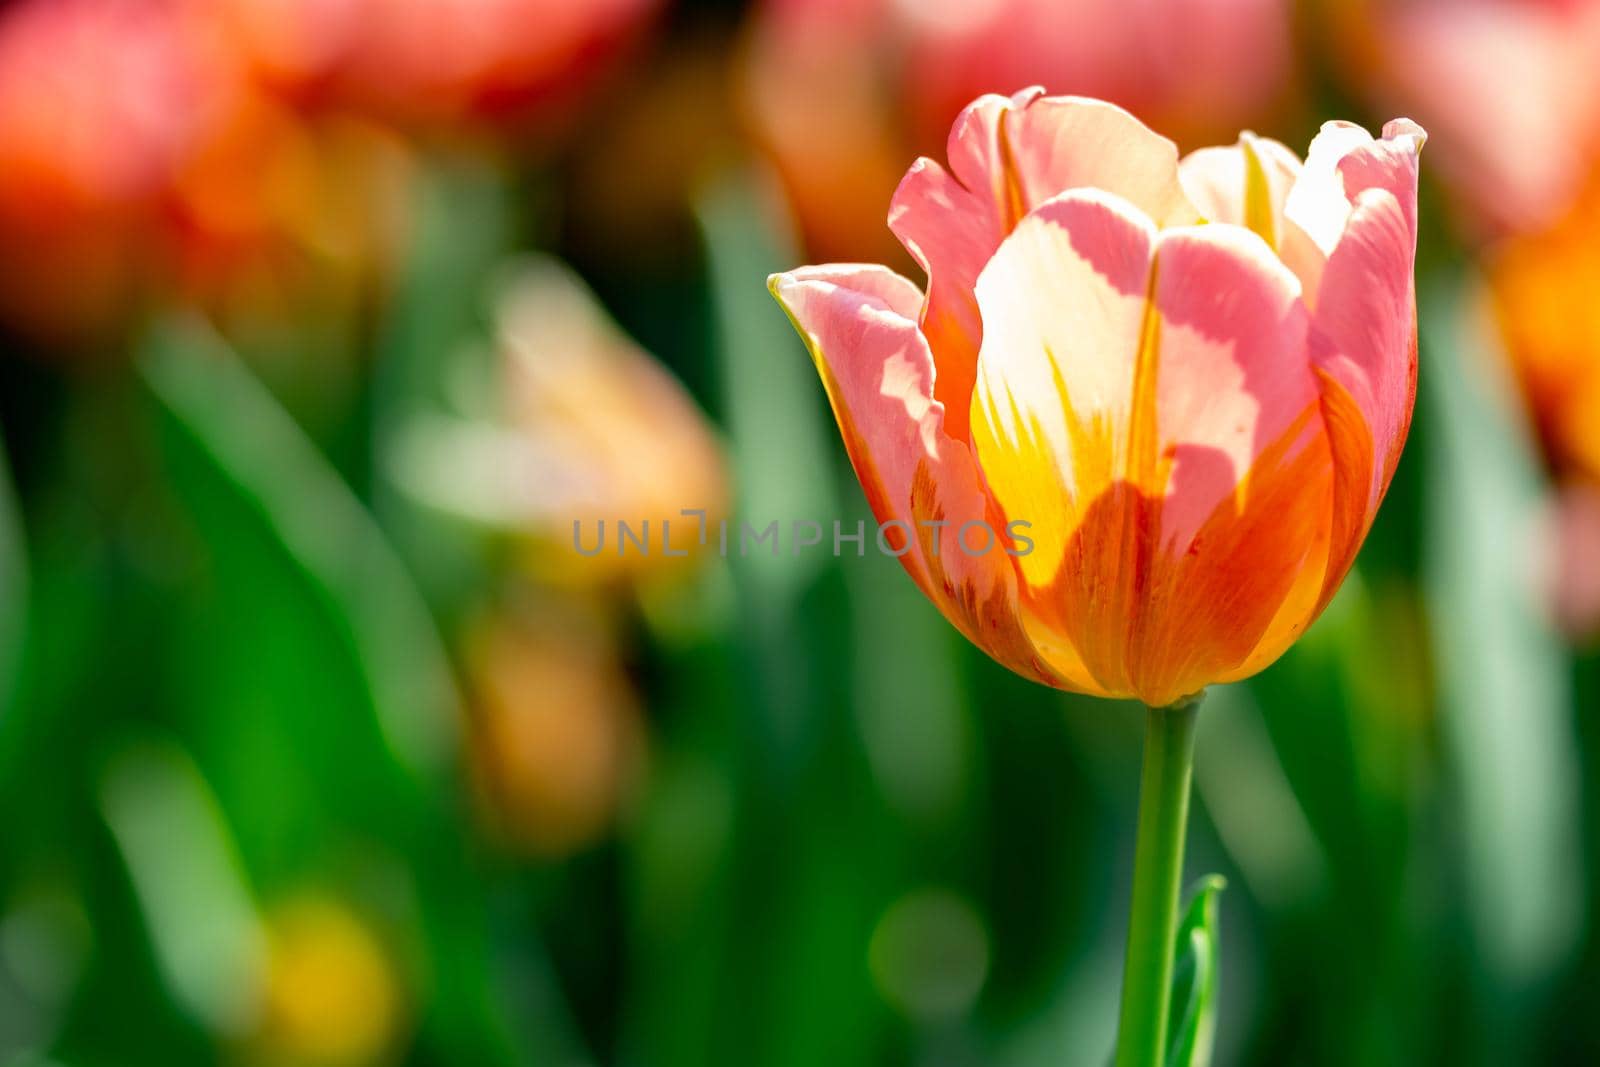 Orange tulips with green blurry background by billroque